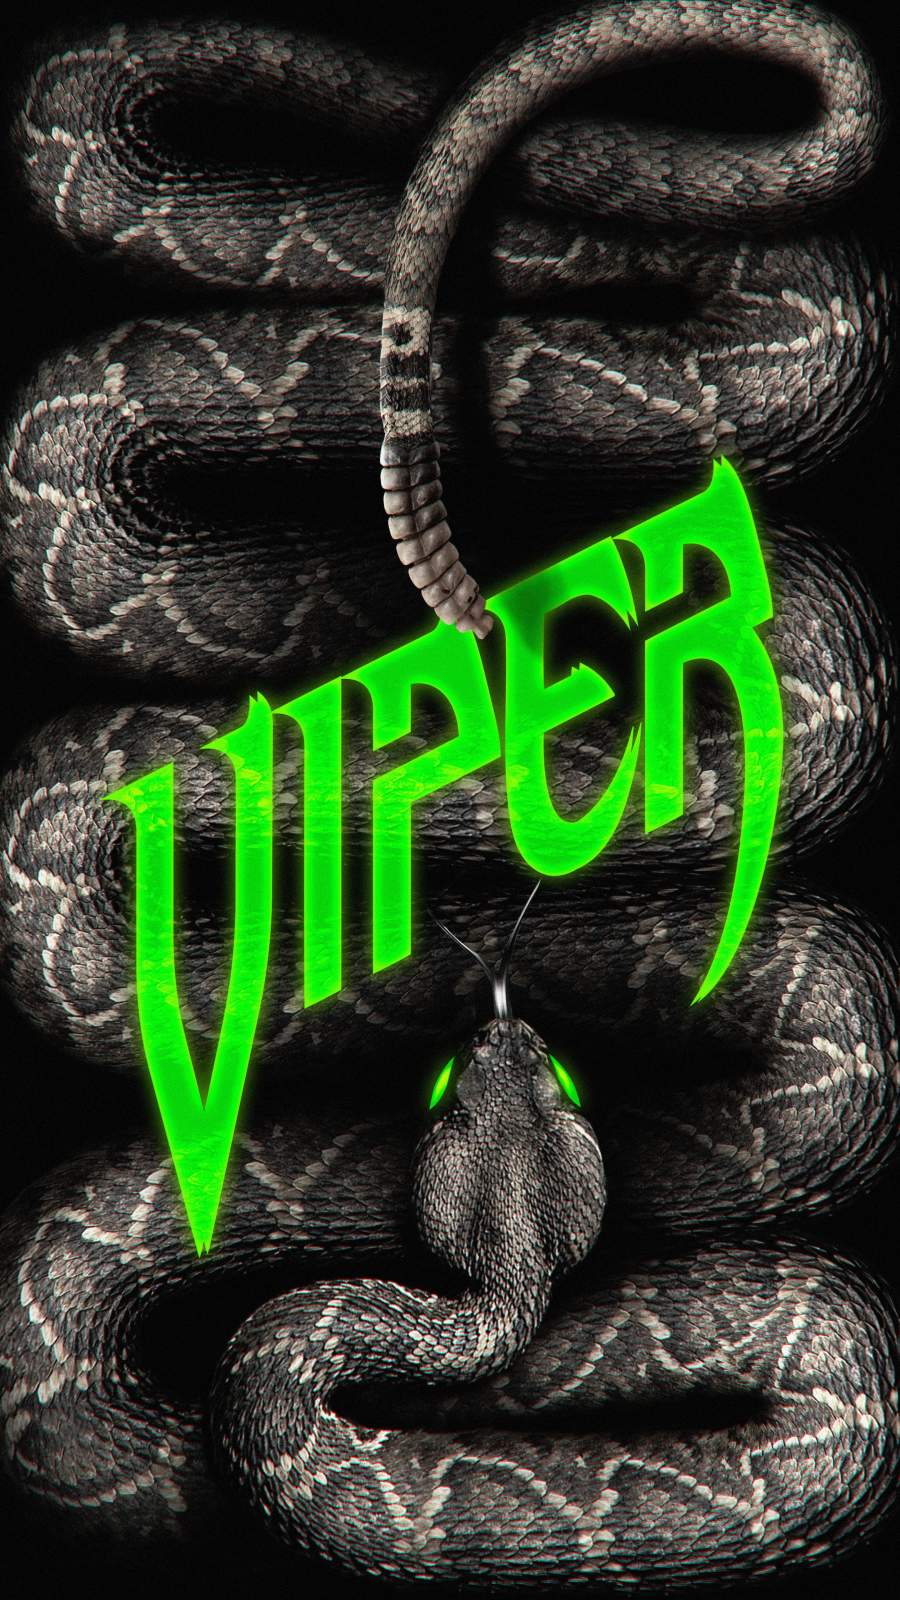 Viper Snake iPhone Wallpaper